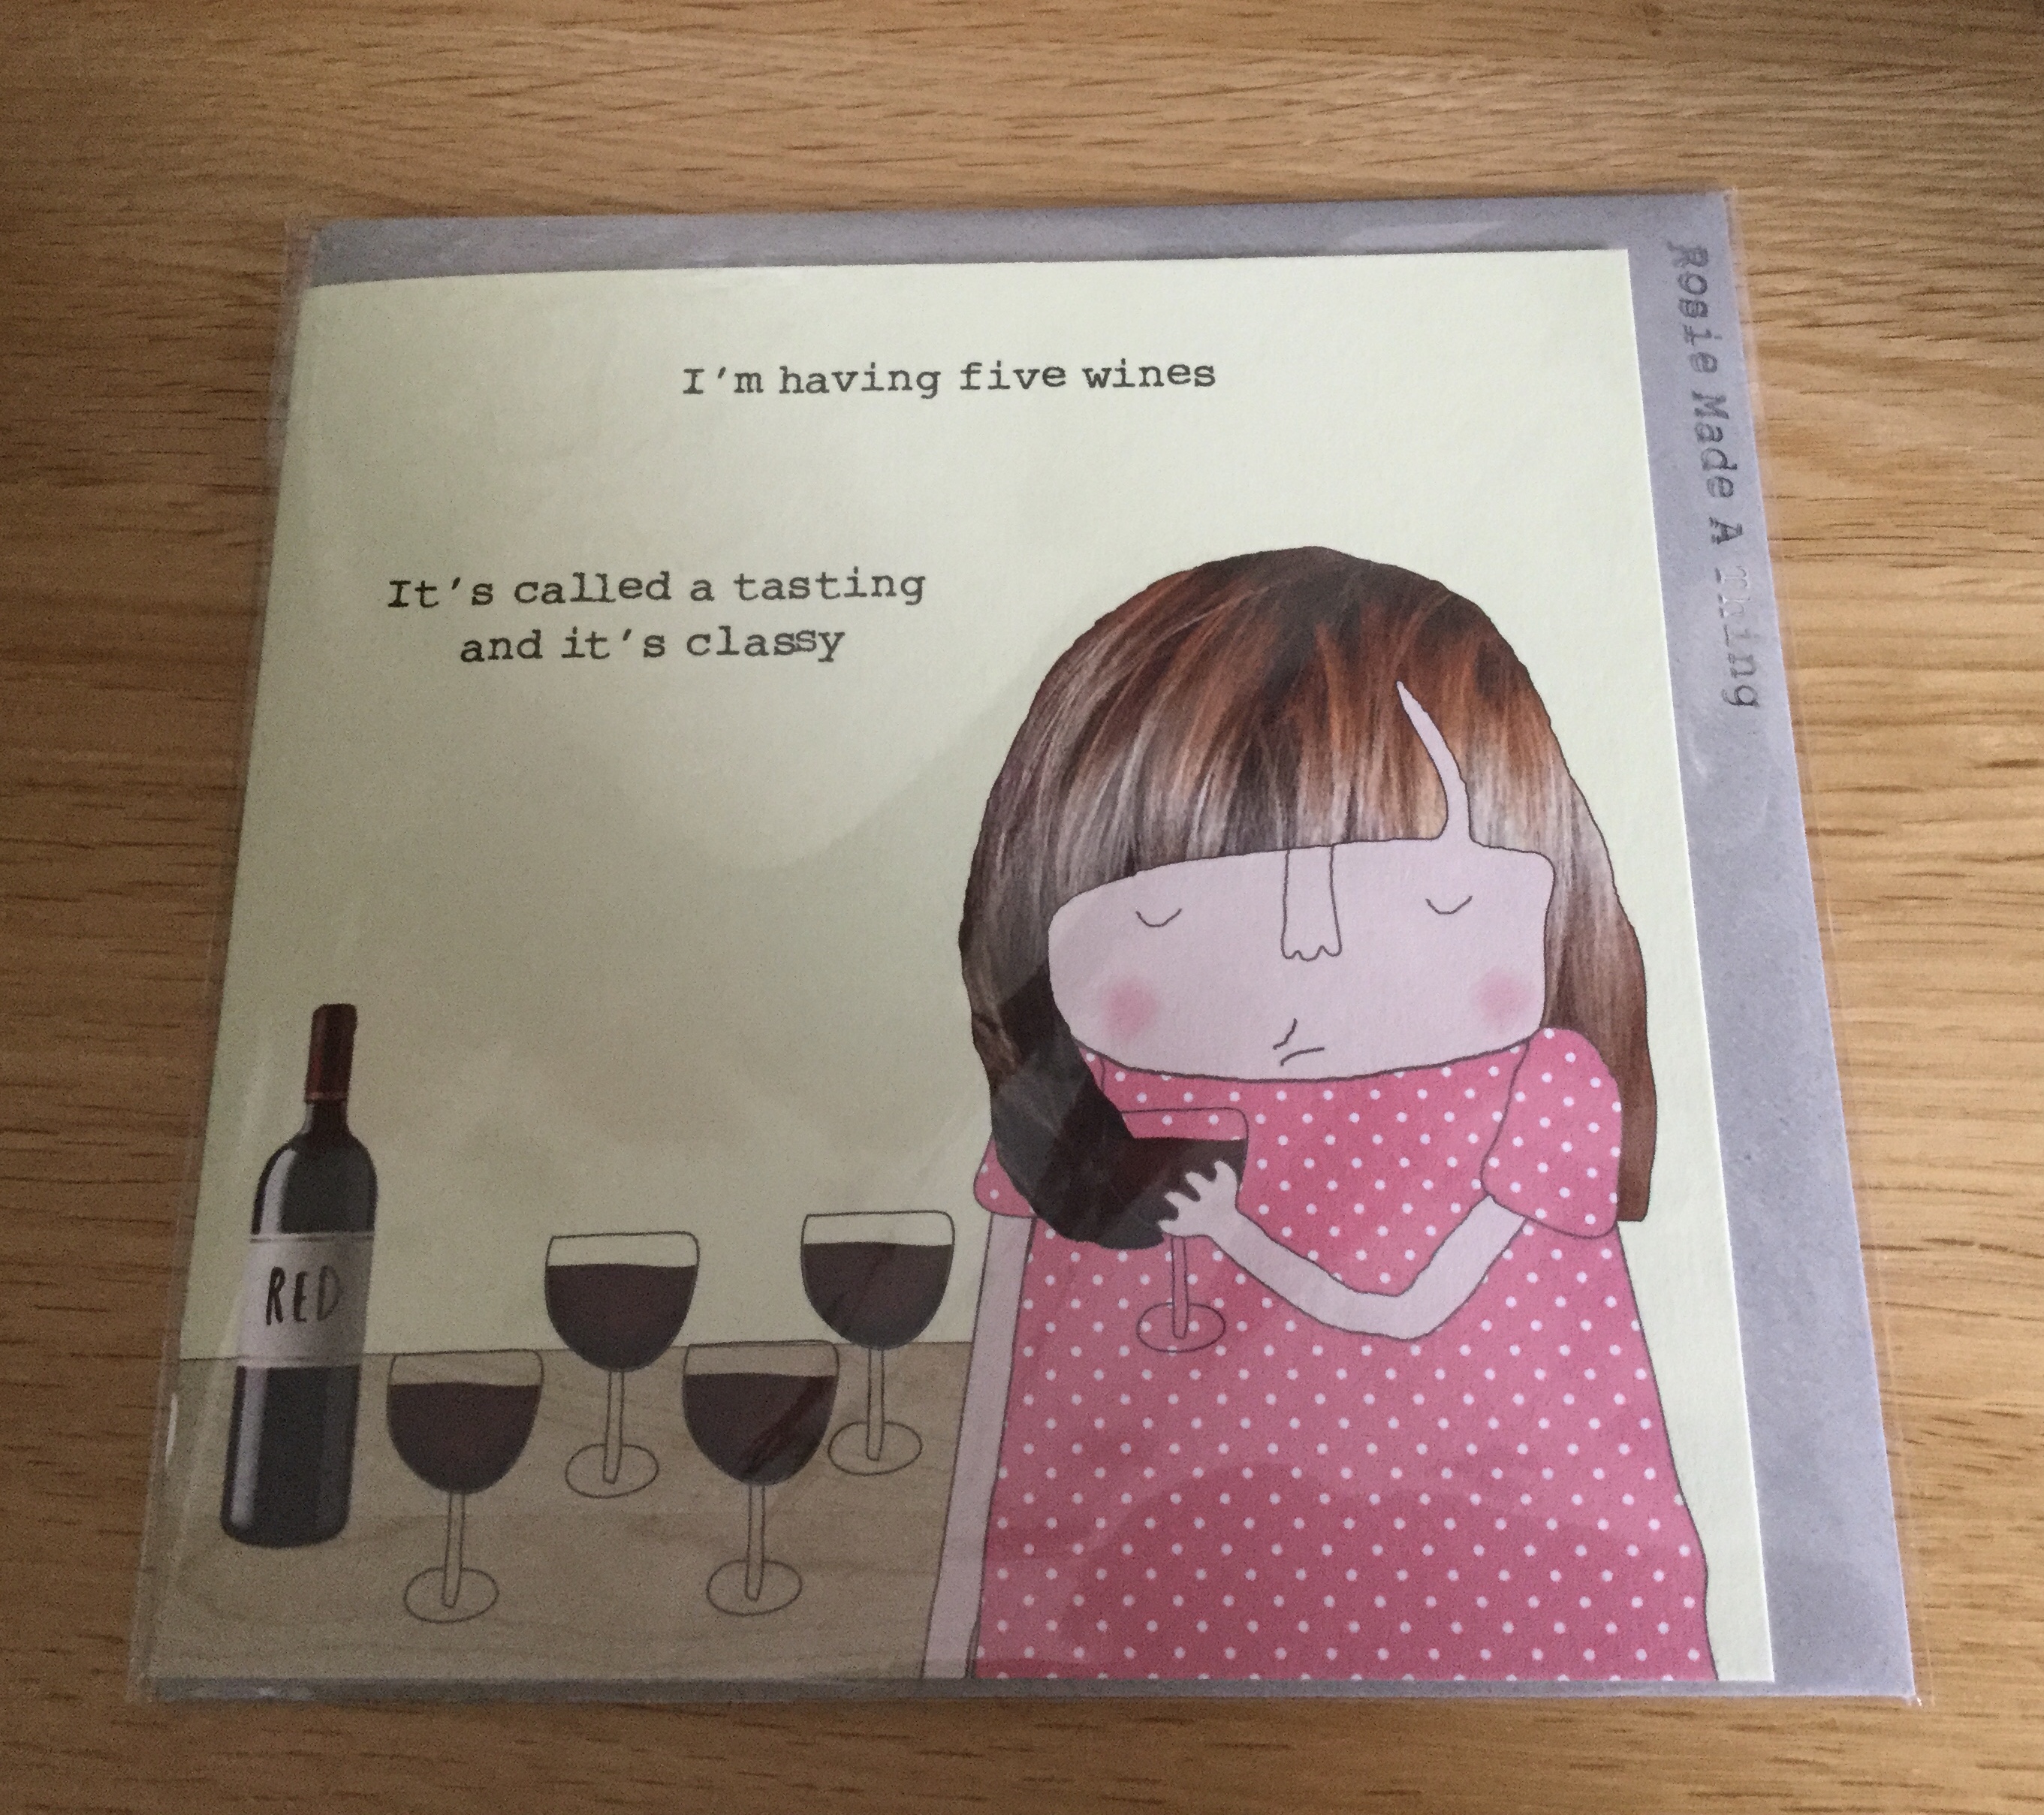 I’m having 5 wines greeting card